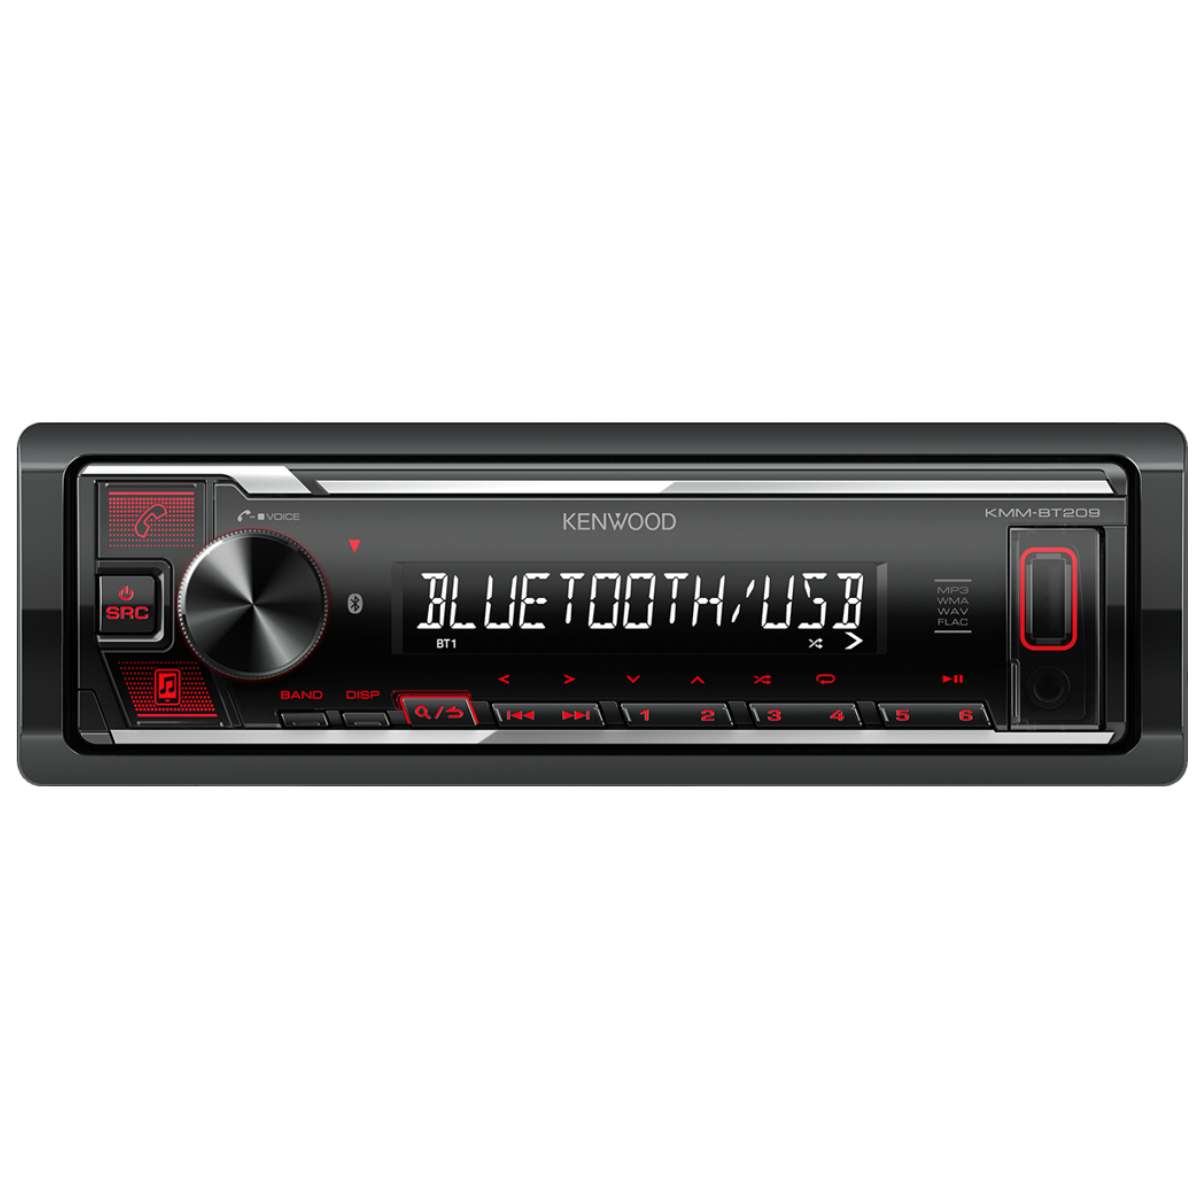 Kenwood KMM-BT206 Auto radio sa ugrađenim Bluetooth-om i USB konektorom, kompatibilan sa iOS i Android uređajima, LCD displejom itd.